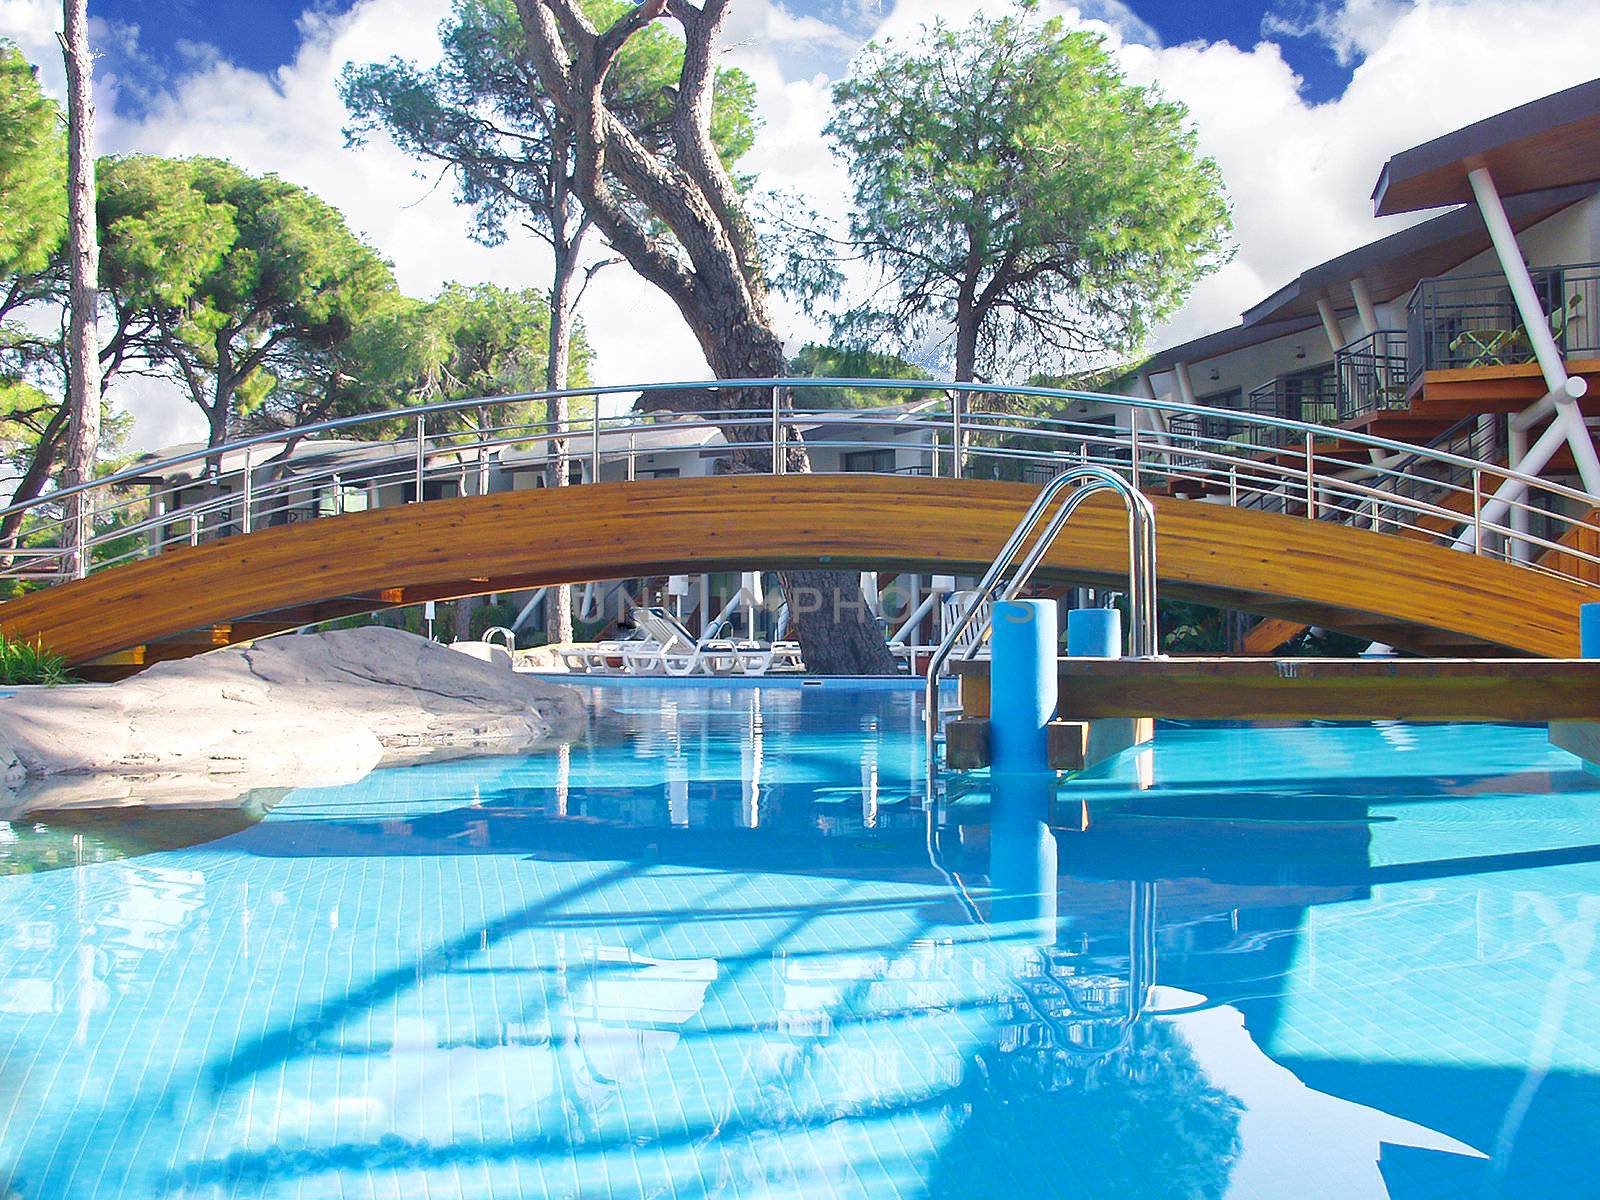 Swimming pool in spa resort 